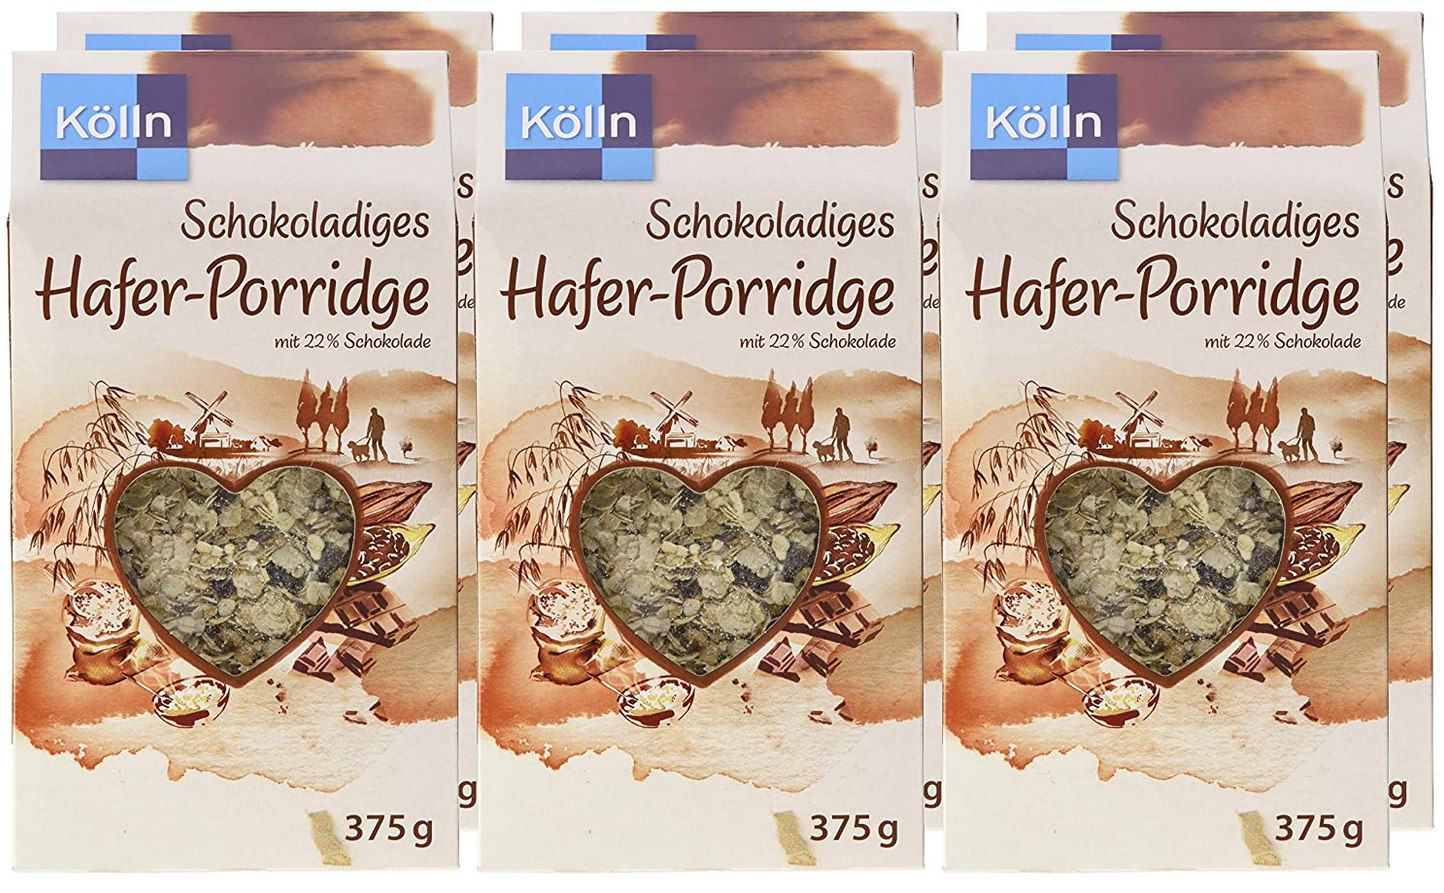 6x Kölln Schoko Hafer Porridge (je 375g) für 12,36€ (statt 21€)